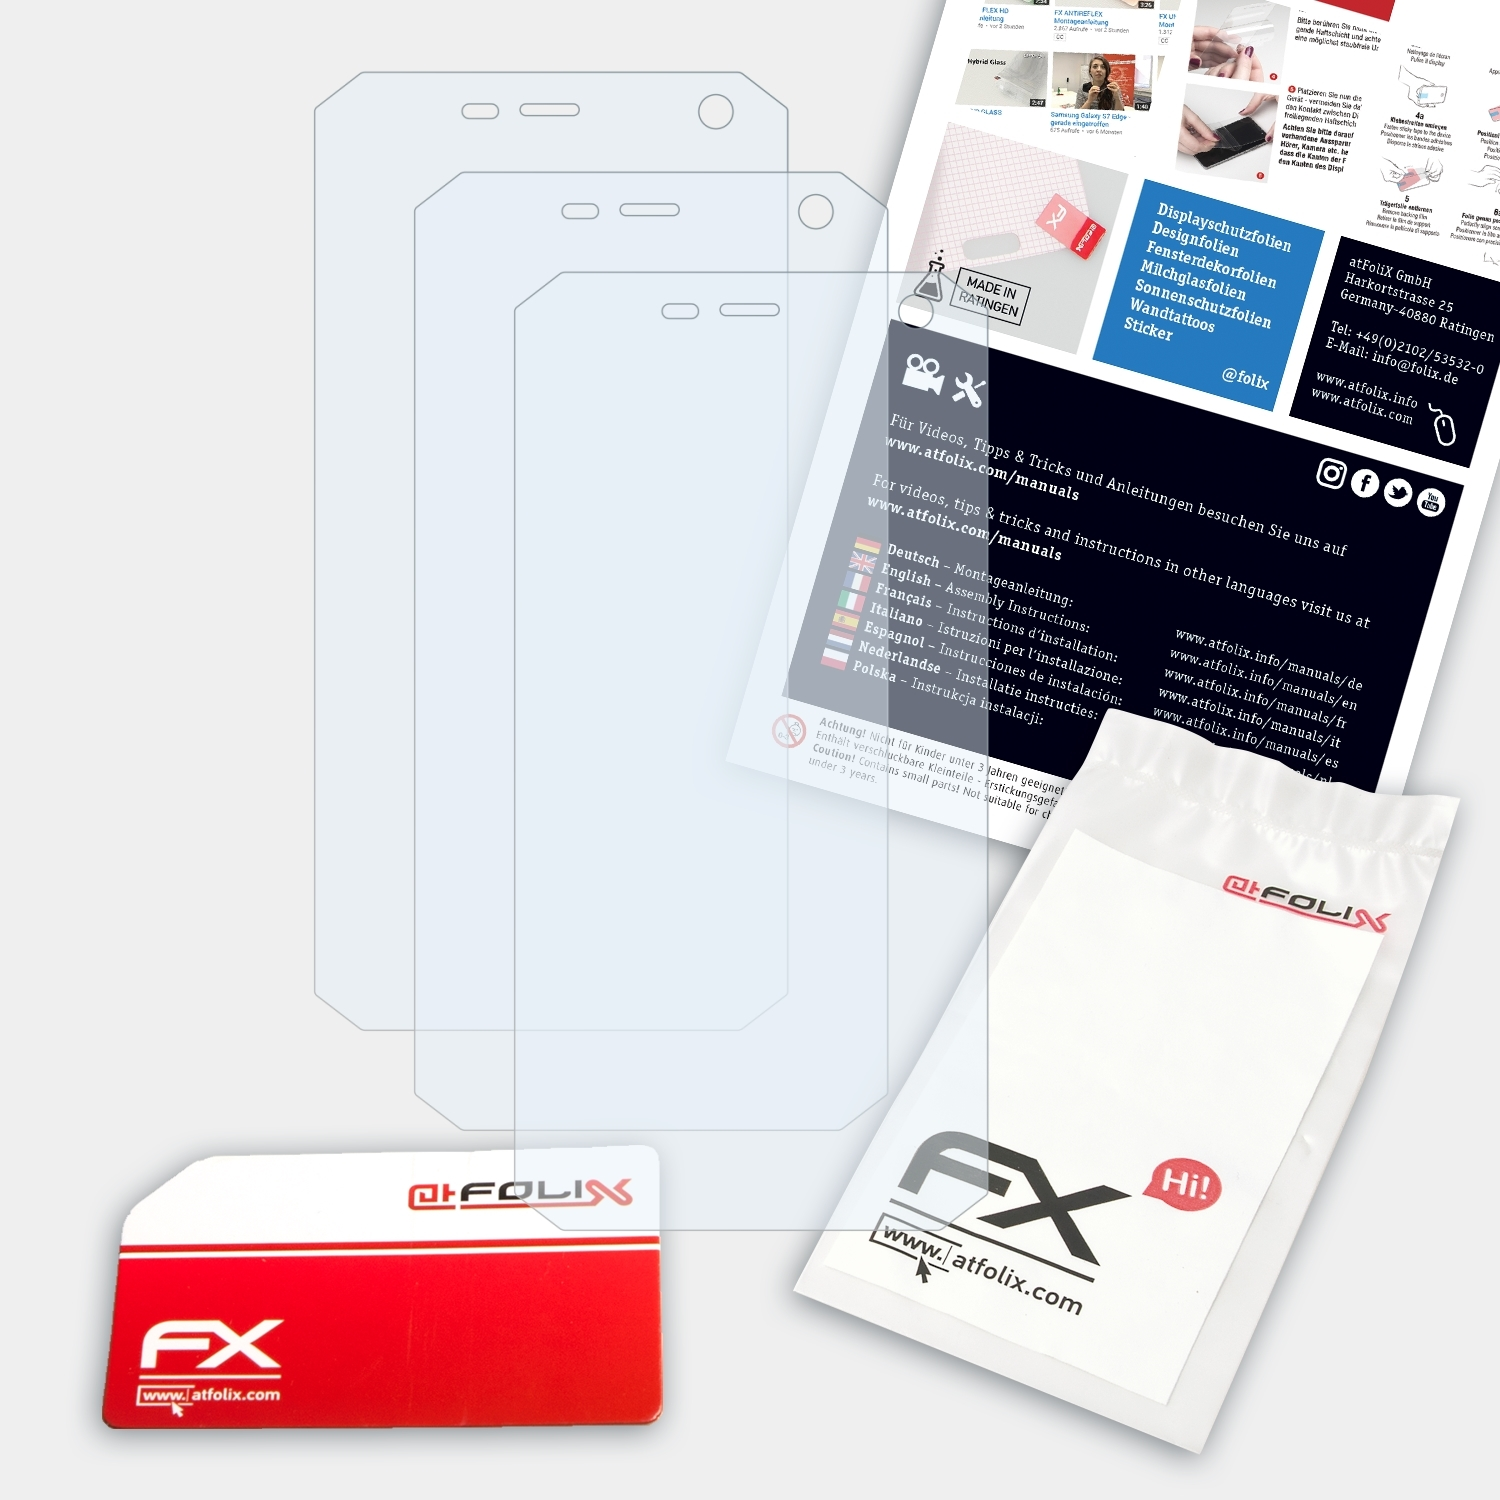 ATFOLIX 3x FX-Clear Displayschutz(für Beafon X5)